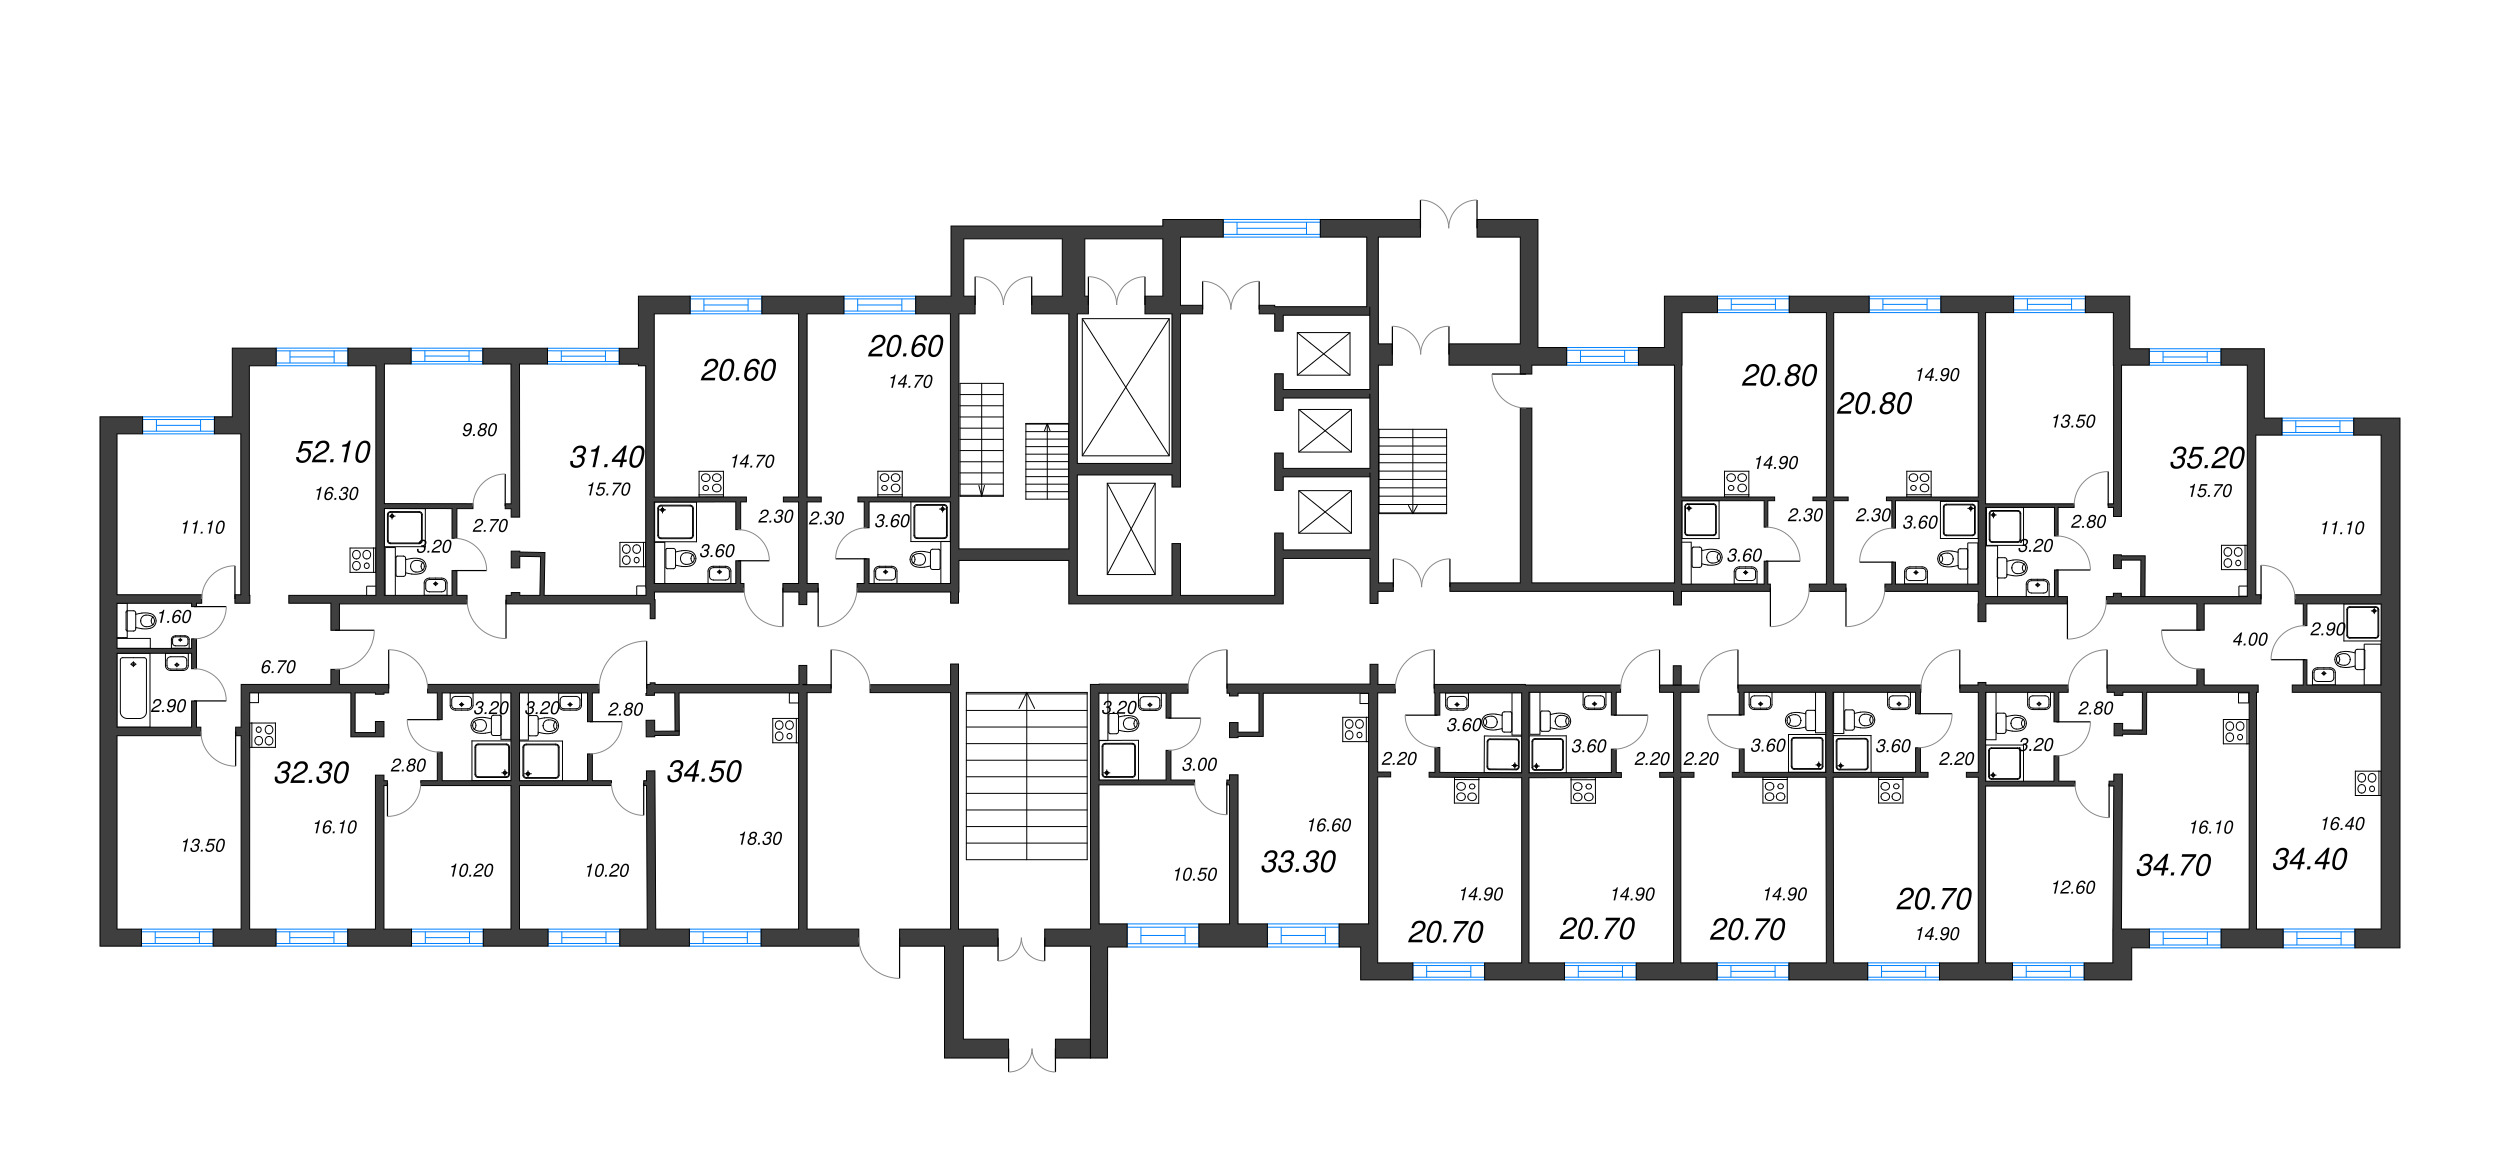 2-комнатная (Евро) квартира, 34.5 м² - планировка этажа